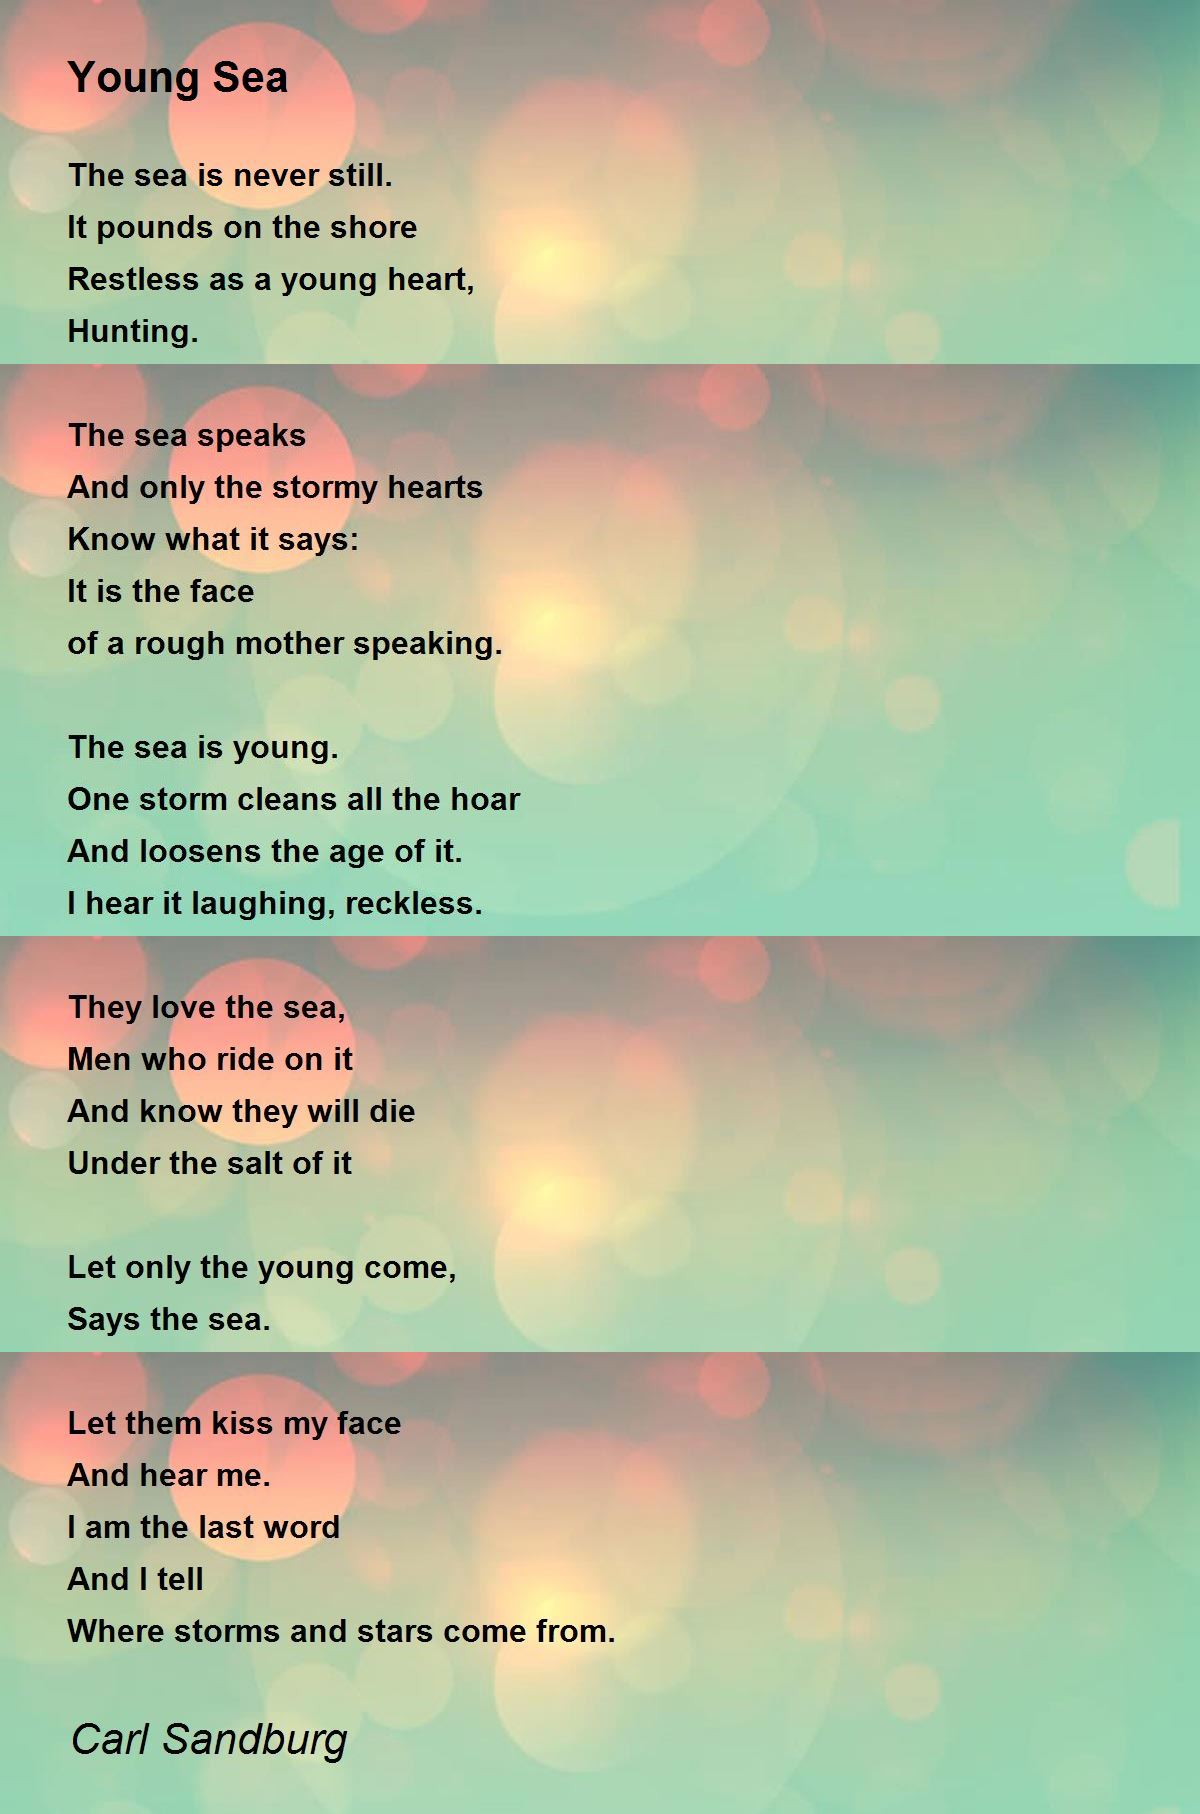 Young Sea Poem by Carl Sandburg - Poem Hunter